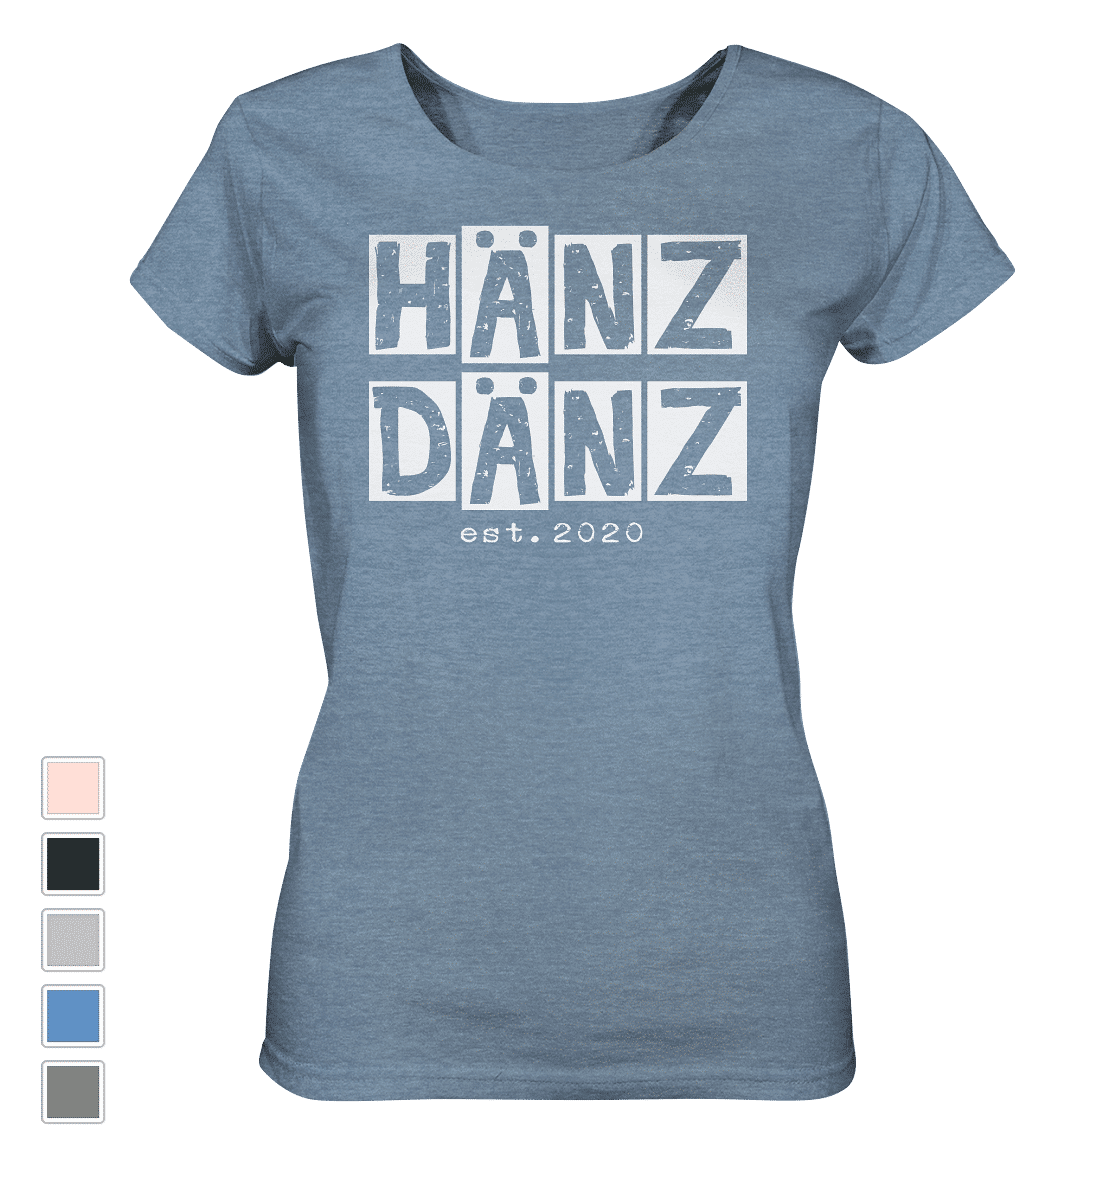 #HÄNZDÄNZ | Frauen Bio T-Shirt (meliert) - Produktbild